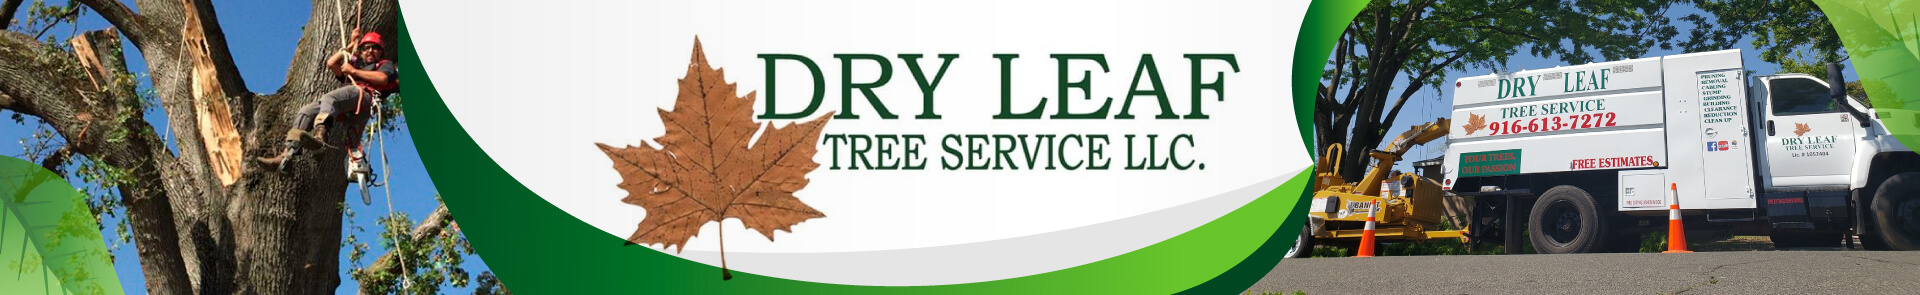 Dry Leaf Tree Service - Header